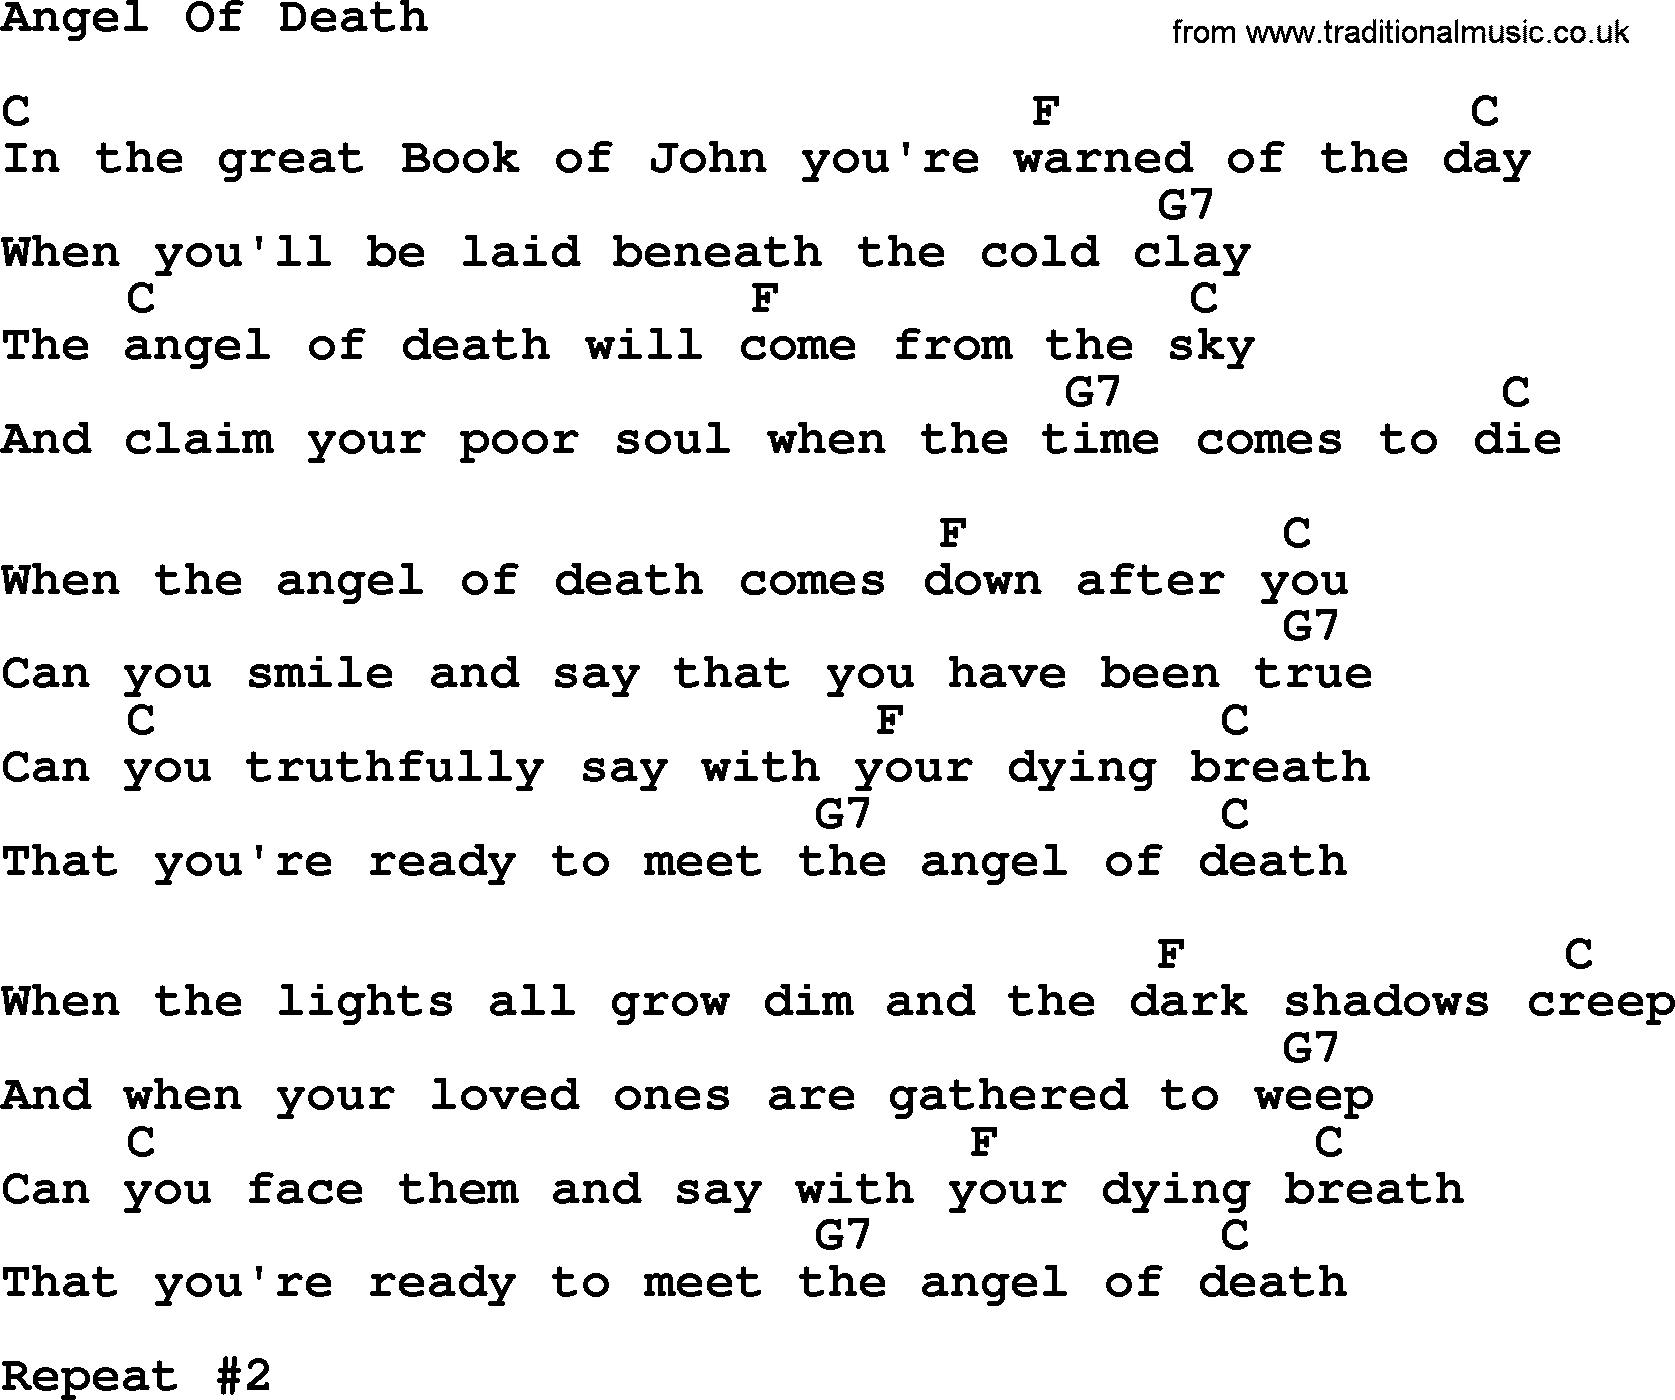 Hank Williams song Angel Of Death, lyrics and chords